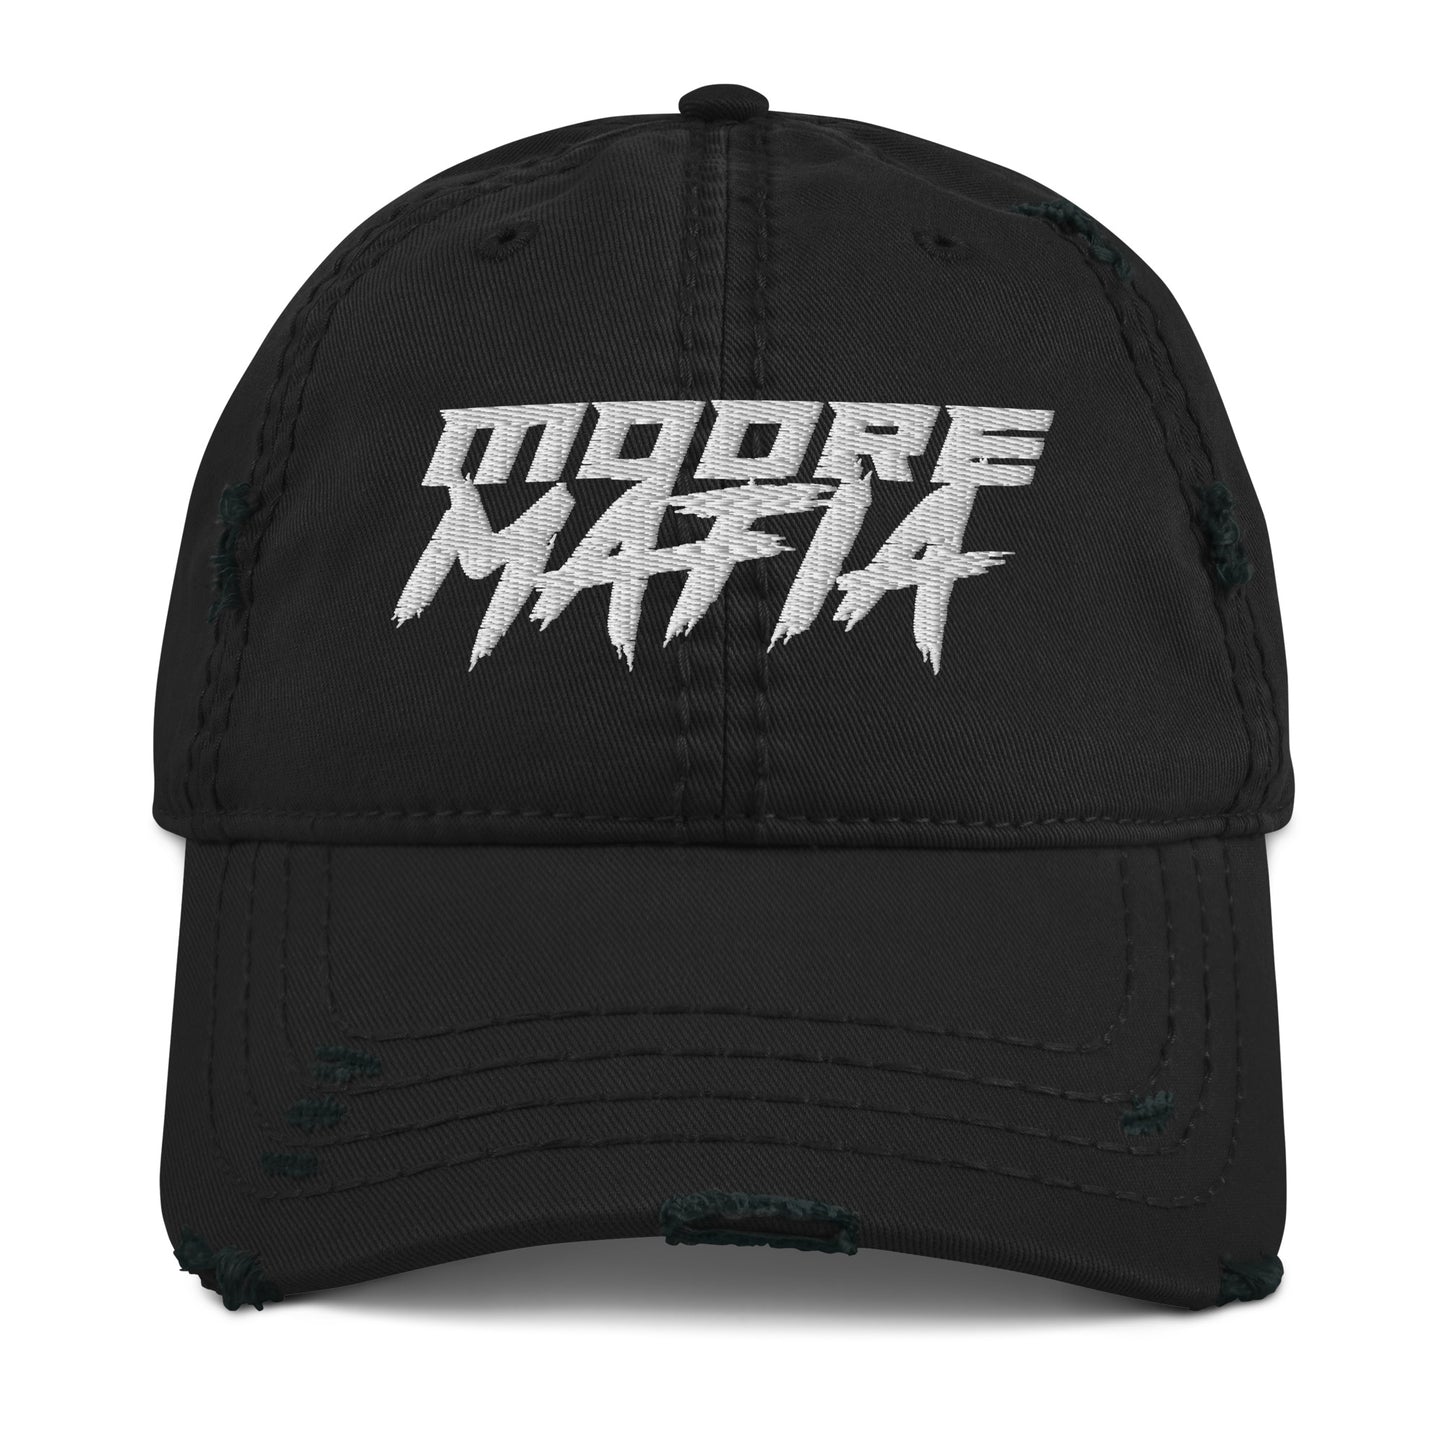 Moore Mafia Distressed Hat